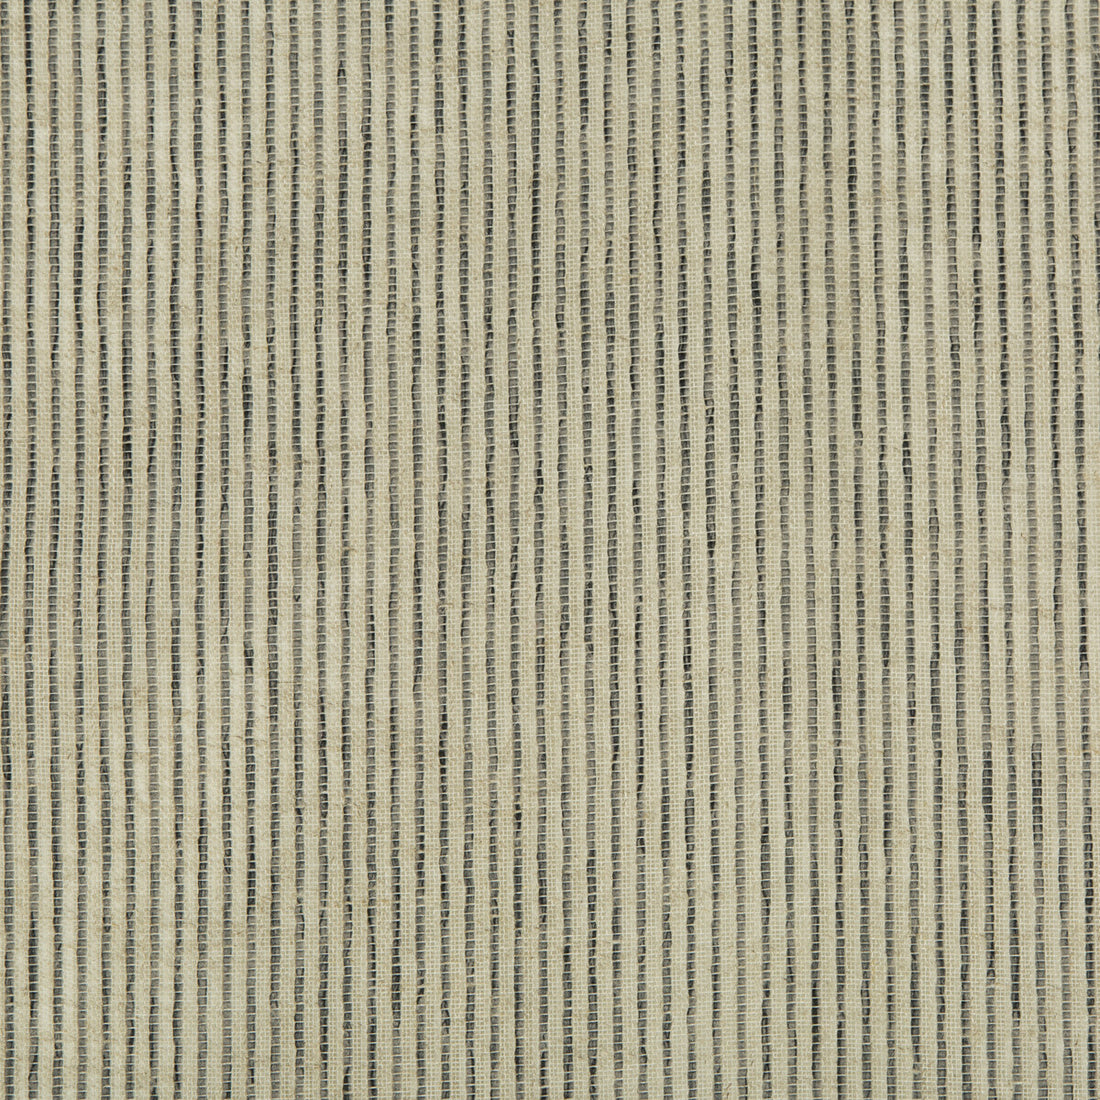 Kravet Basics fabric in 4275-21 color - pattern 4275.21.0 - by Kravet Basics in the Gis collection